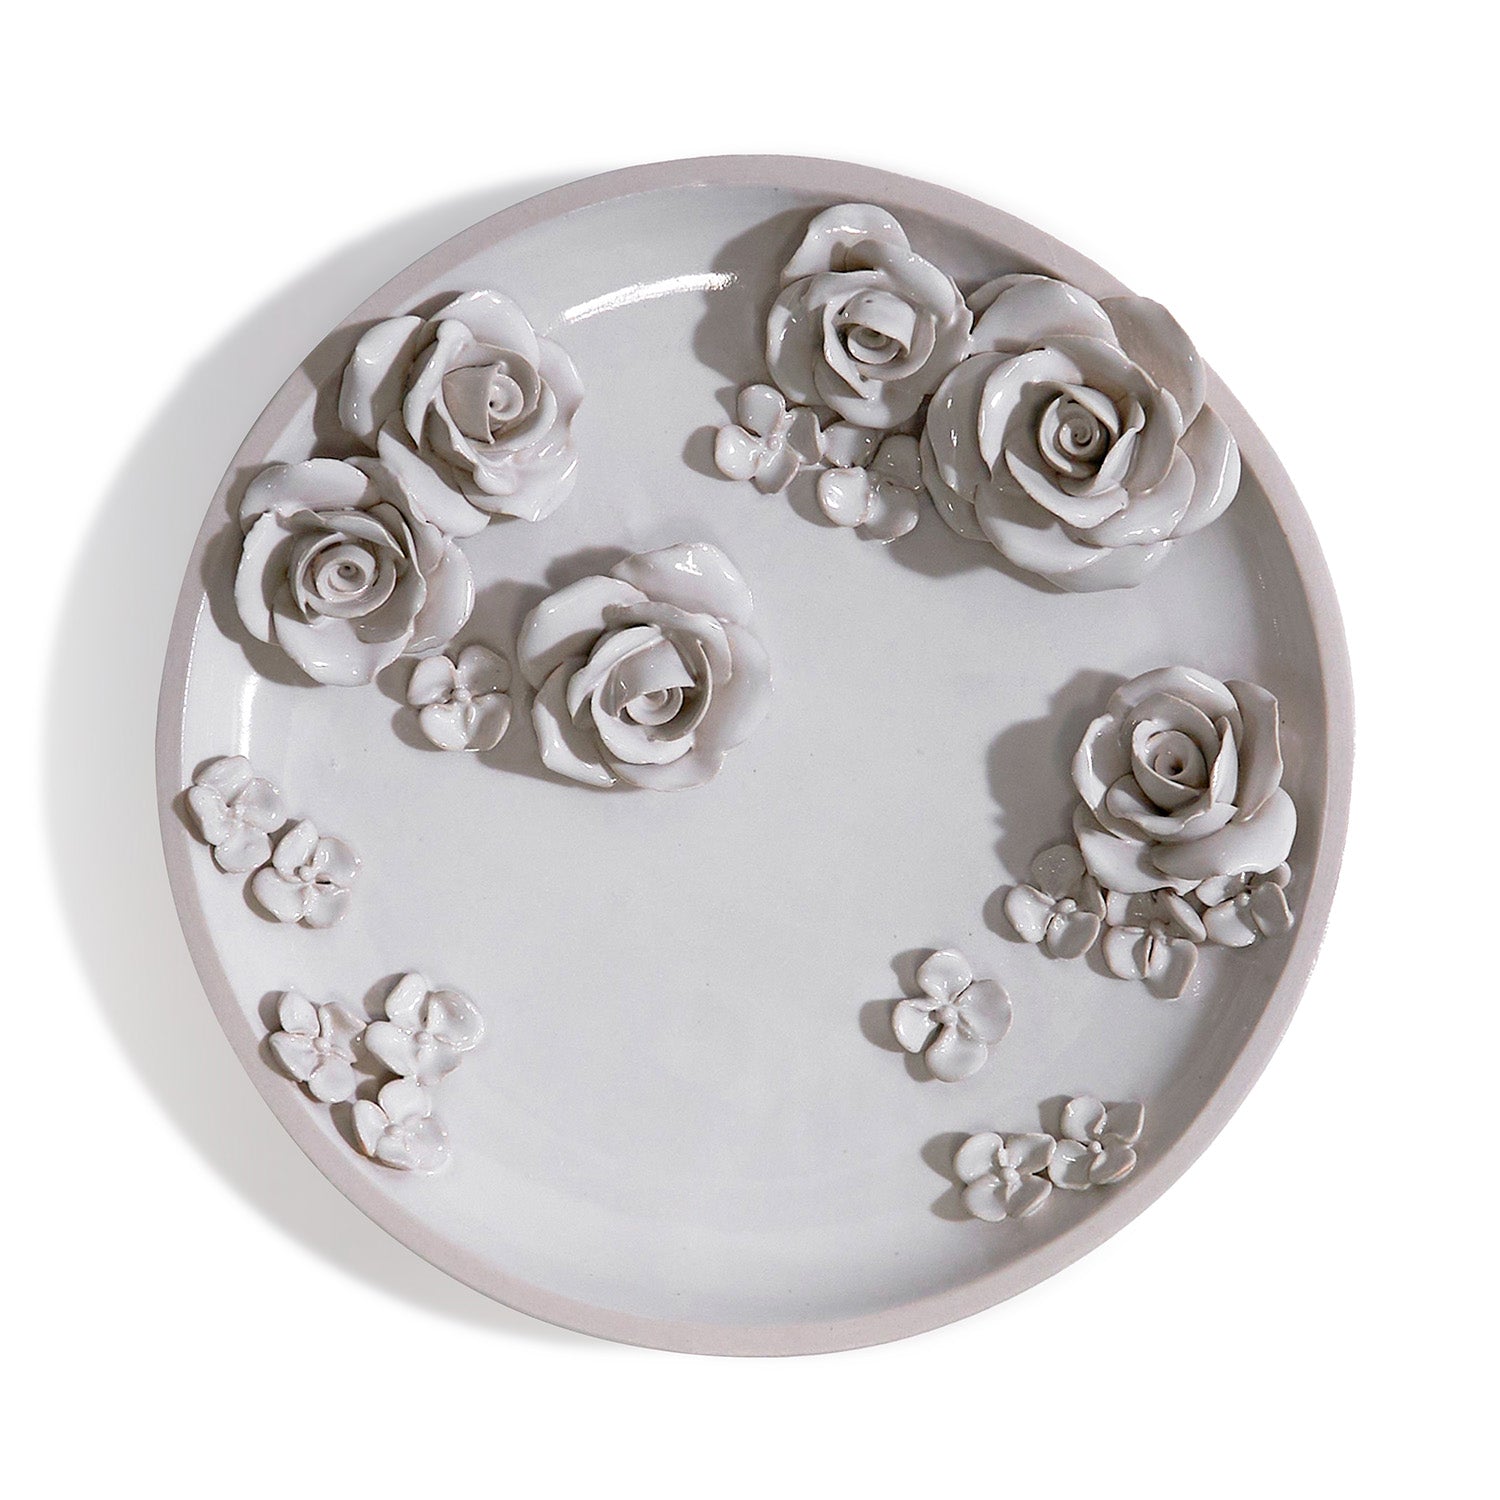 Rosette Tray - Catchall Ceramic Tray